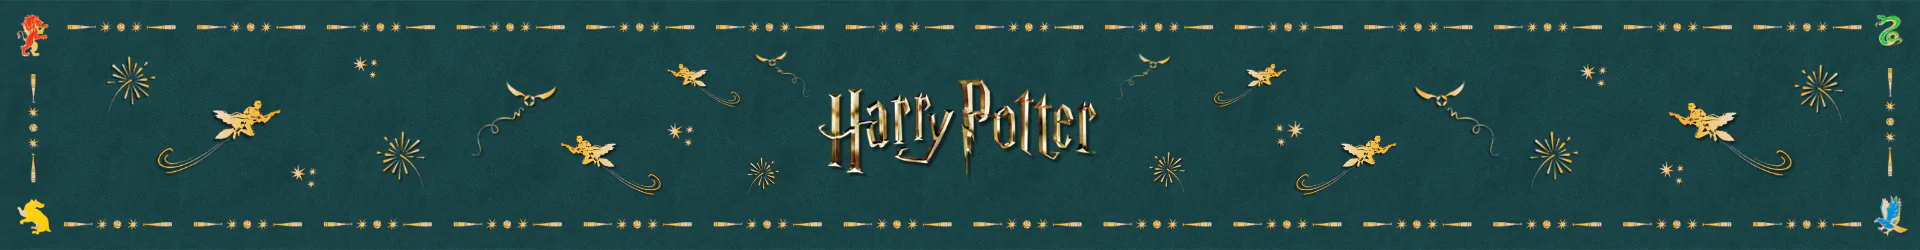 Harry Potter schreibwaren banner